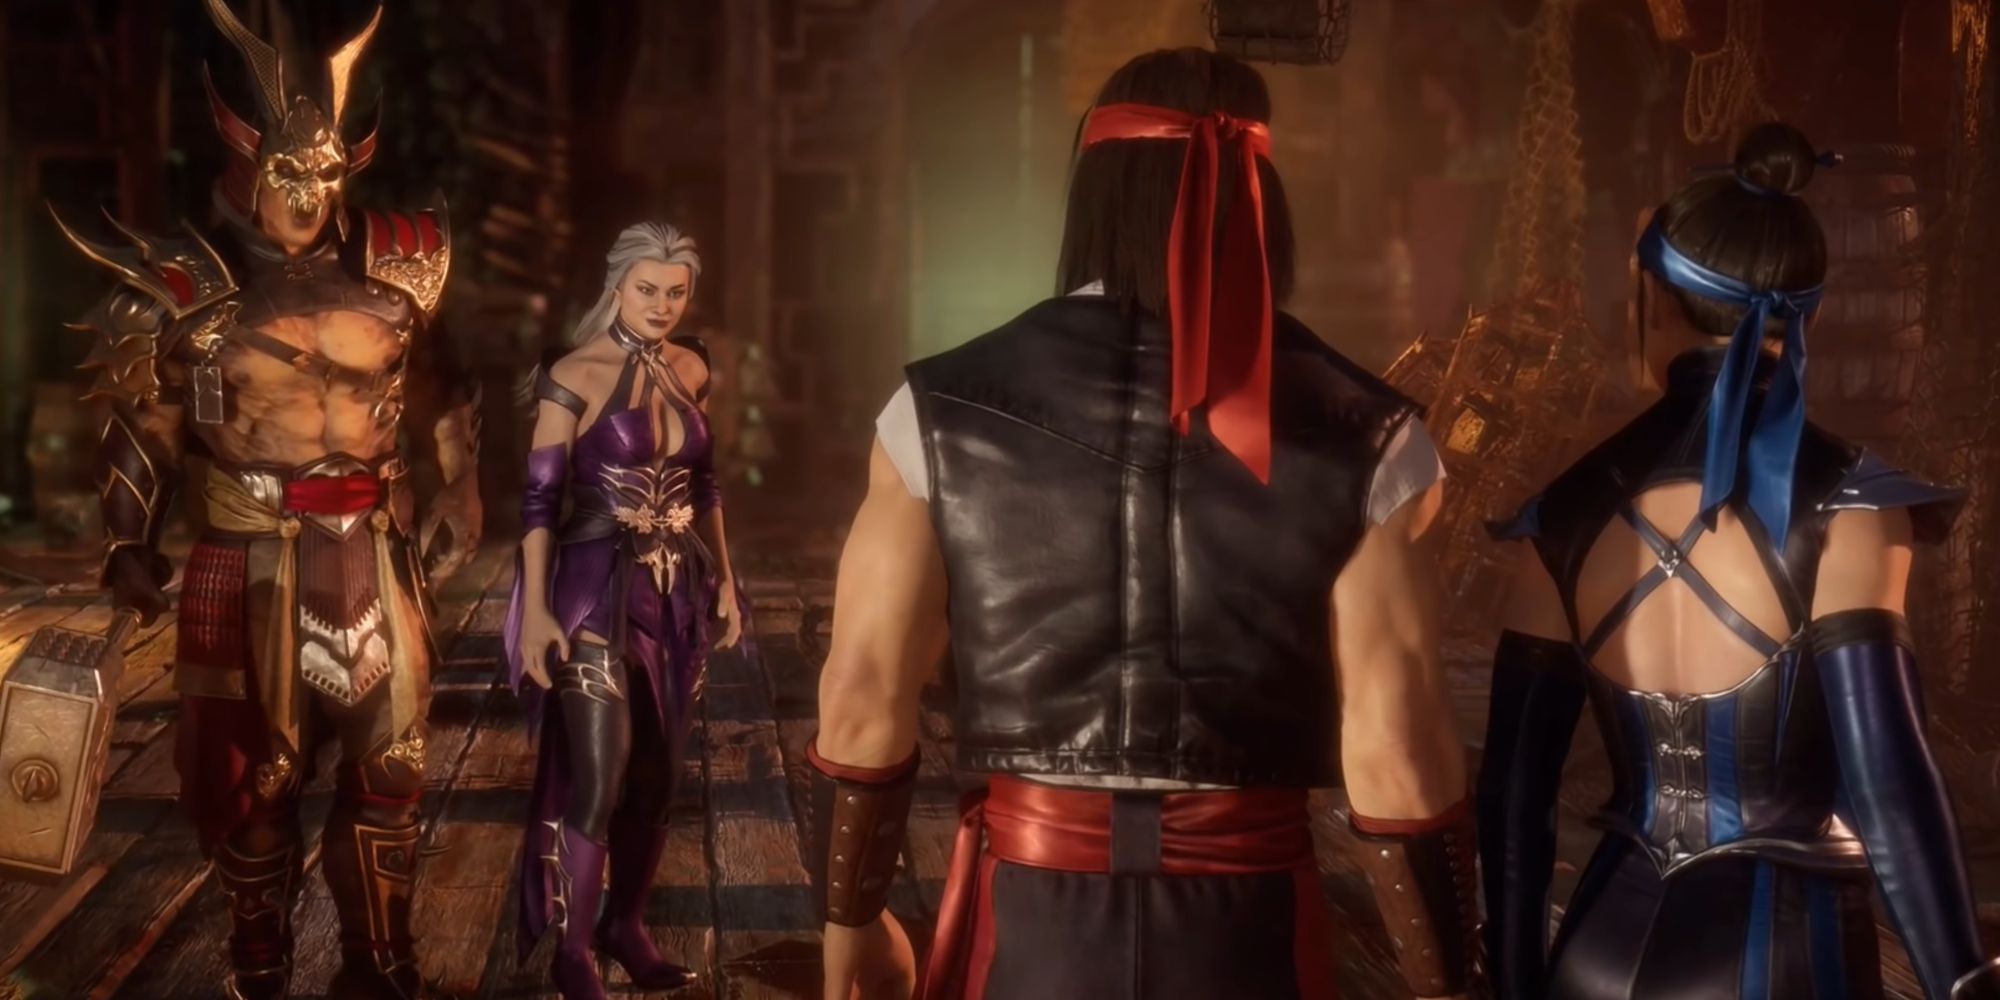 Shao Kahn and Sindel confronting Liu Kang and Kitana in Mortal Kombat 11